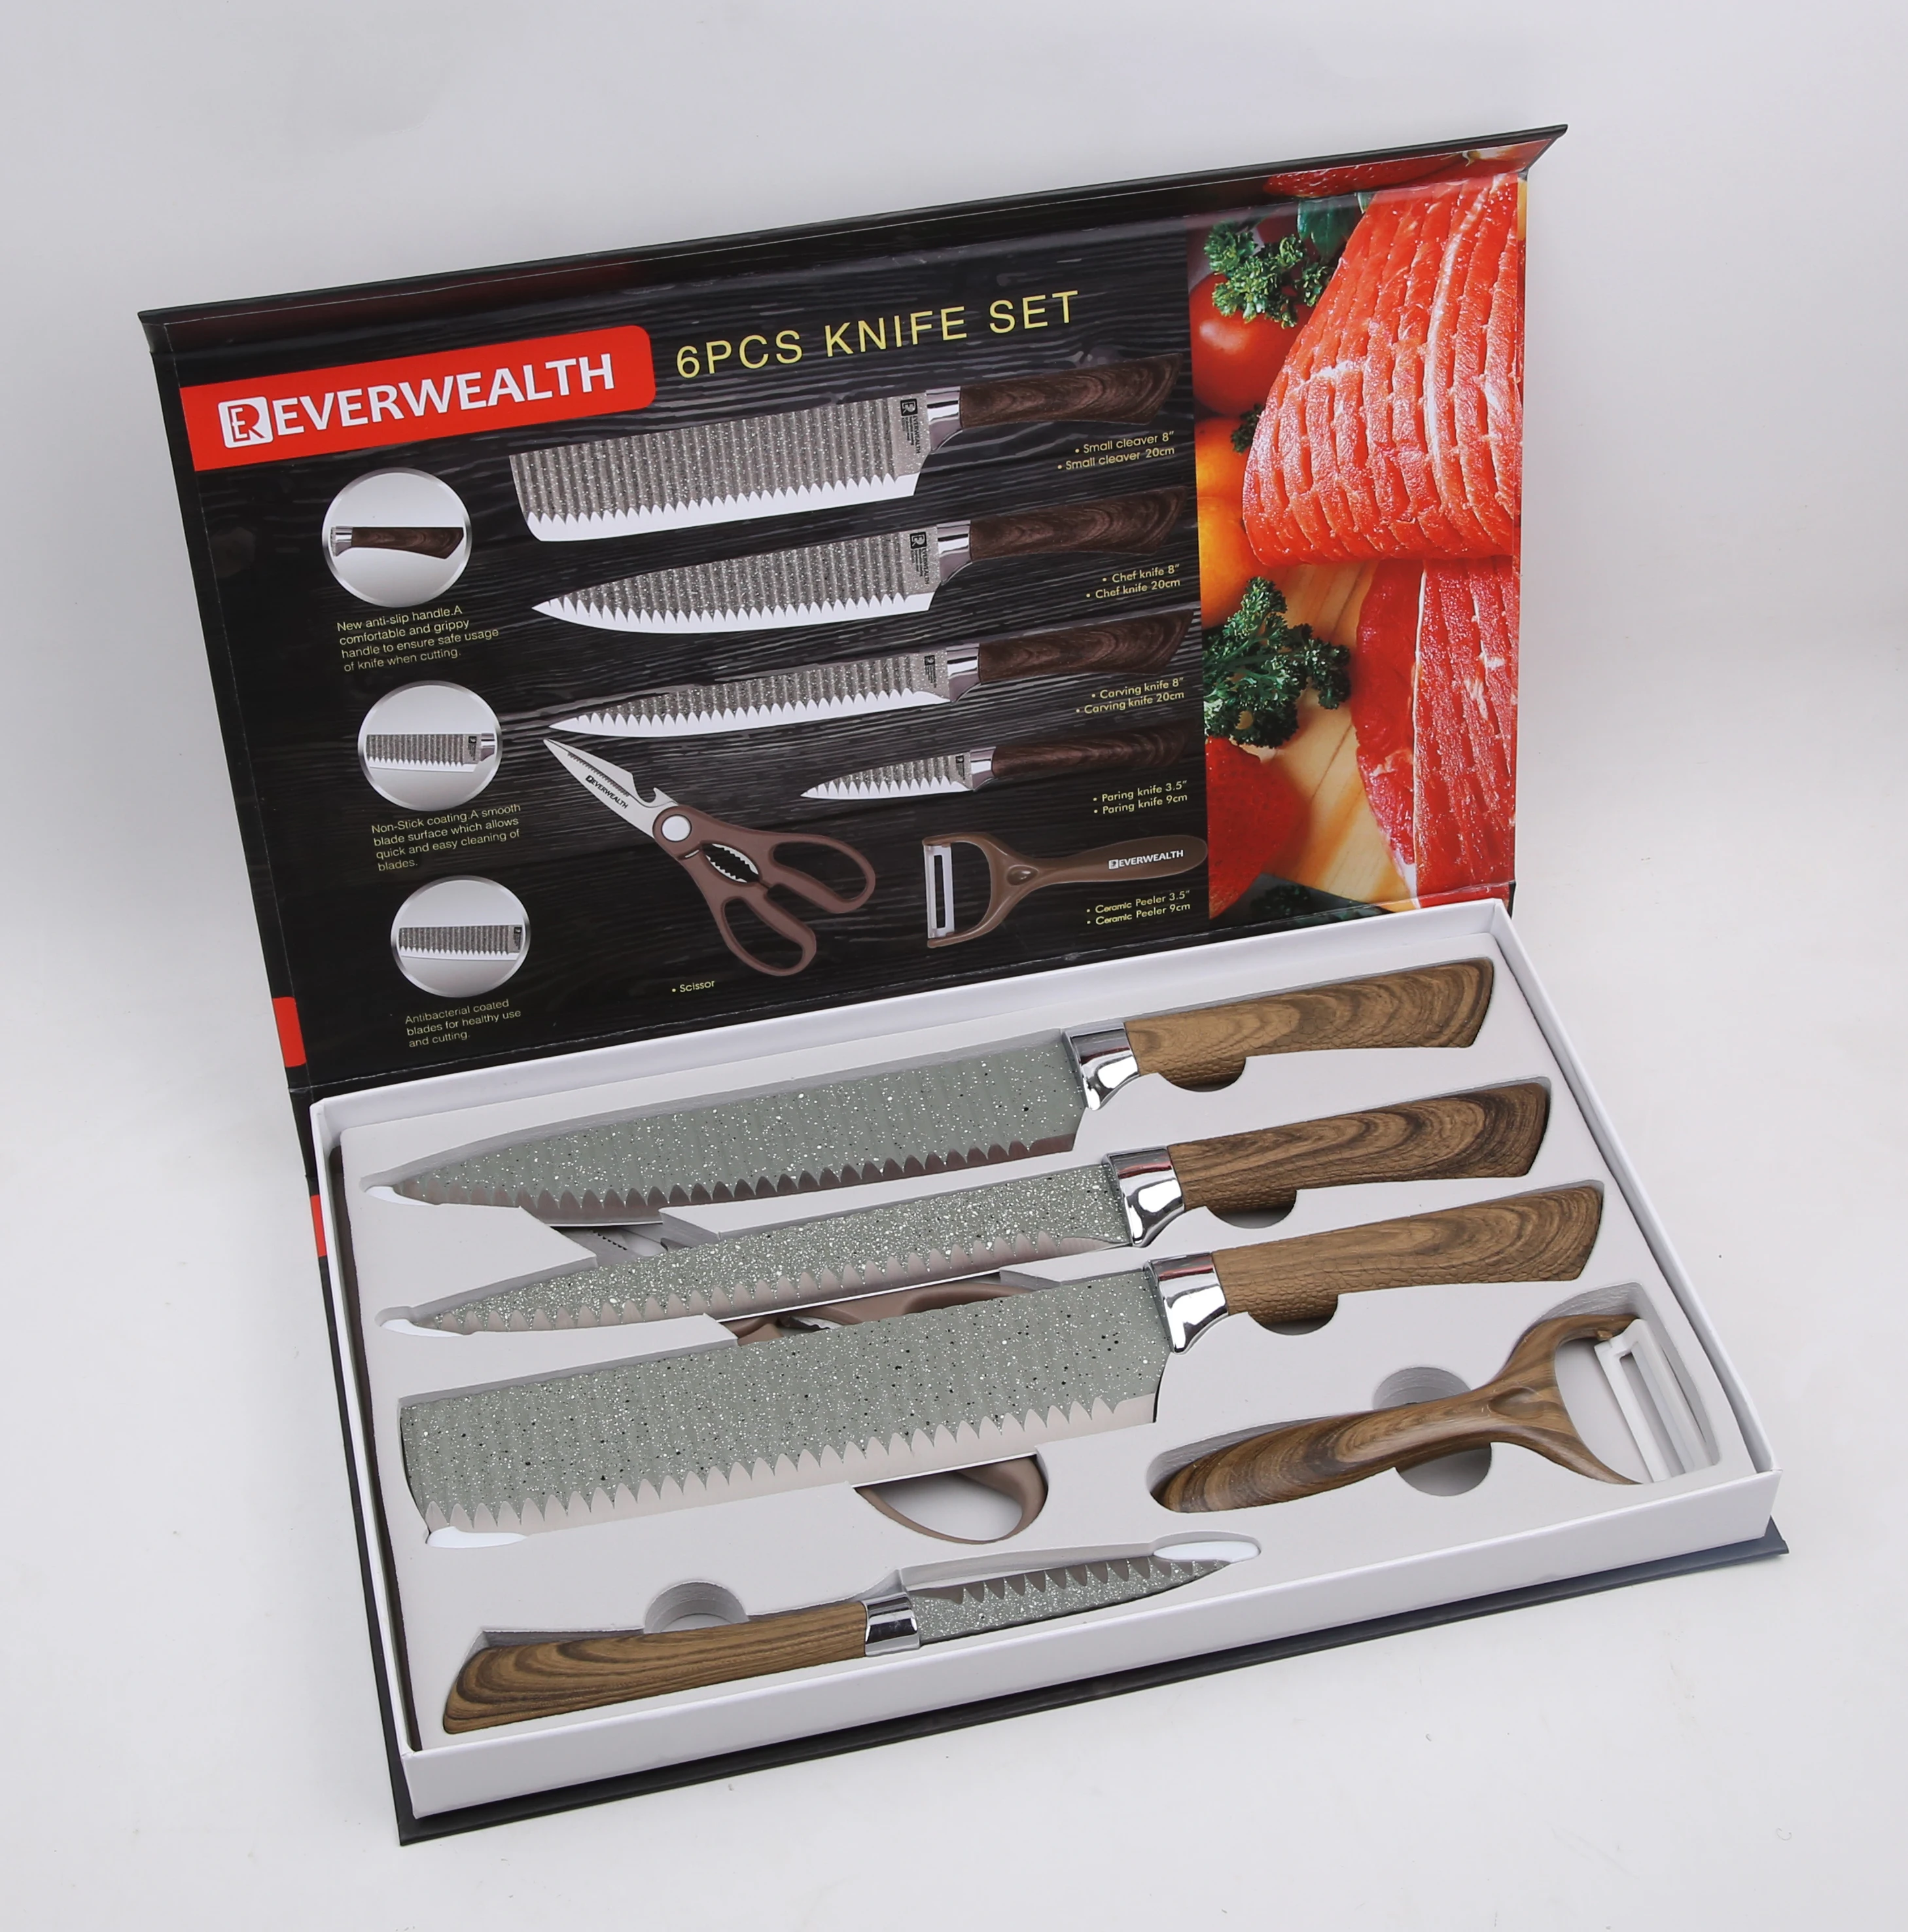 Hot Sale Everrich Knife Set Everwealth 6pcs Knife Set Kitchen